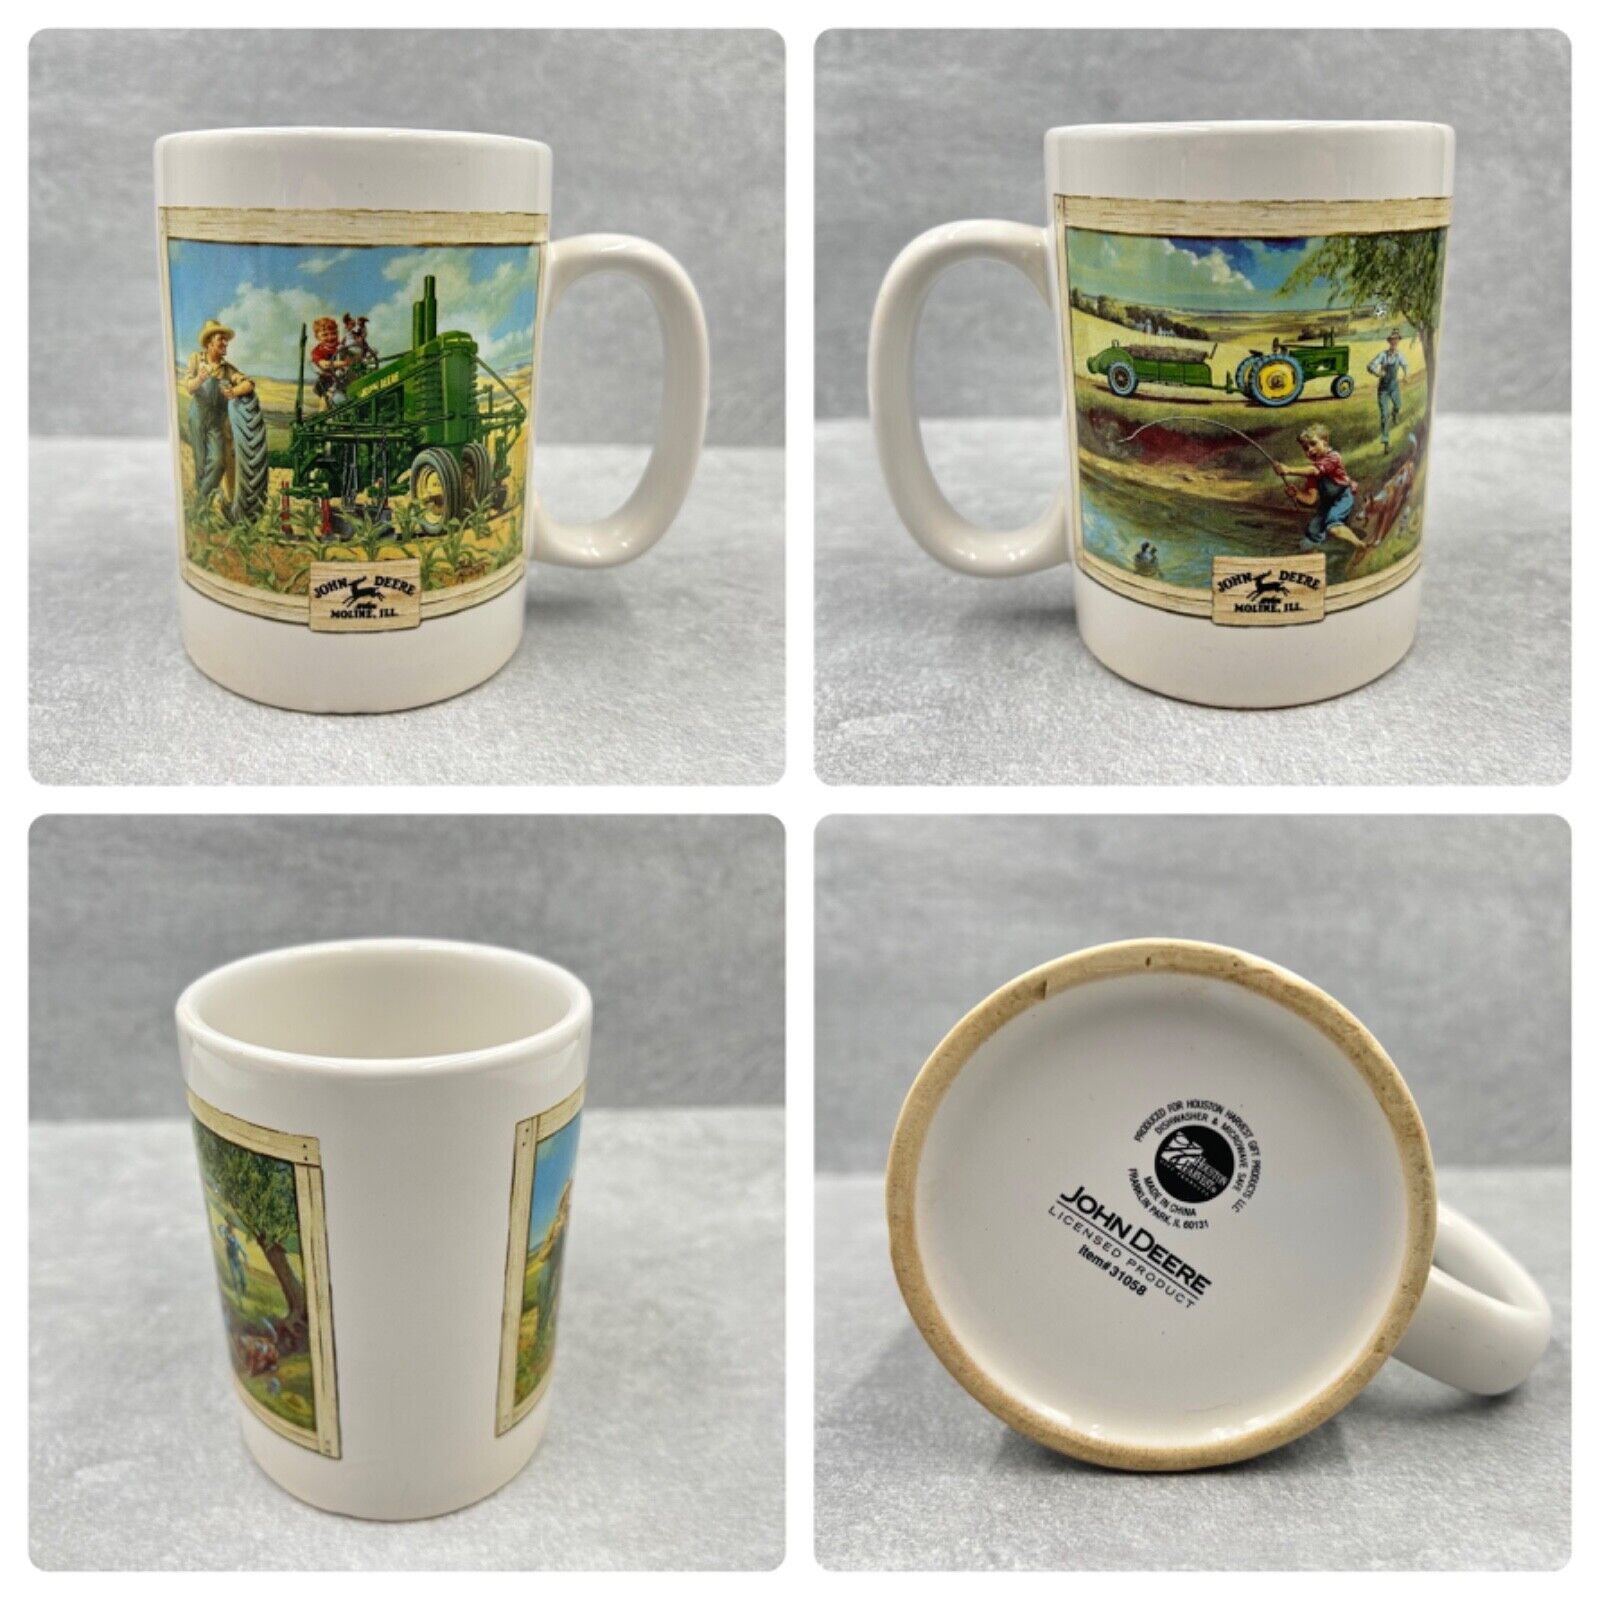 JOHN DEERE Ceramic Coffee Mug Cup 12oz TRACTOR COUNTRY LIFE Item # 31058